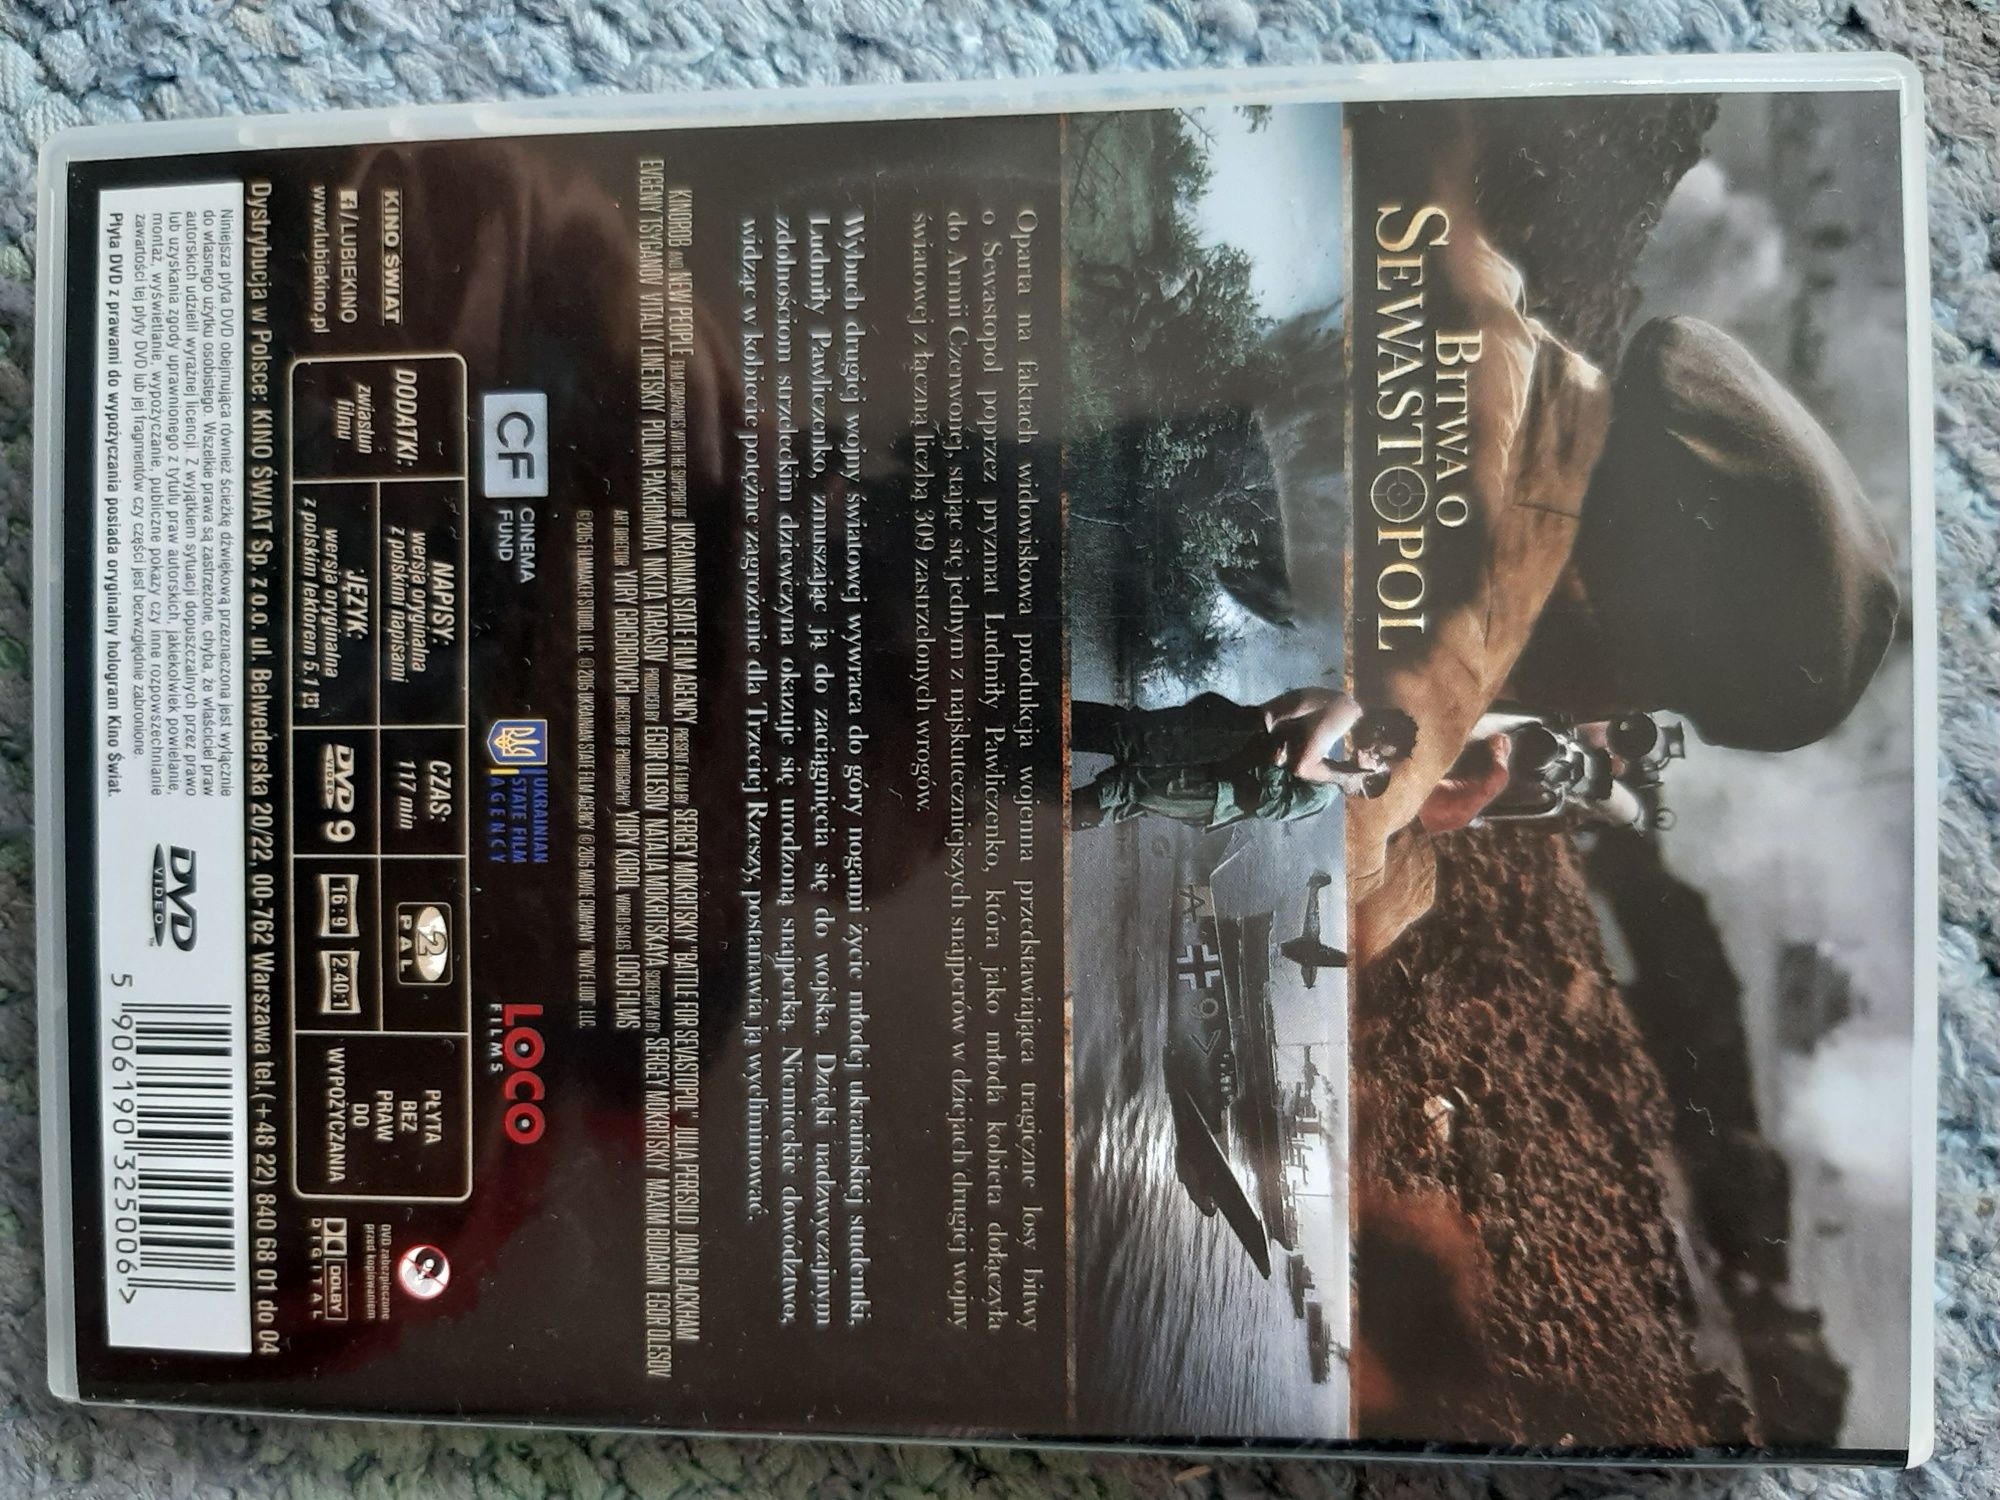 Film DVD "Bitwa o Sewastapol" megaprodukcja ukraińska